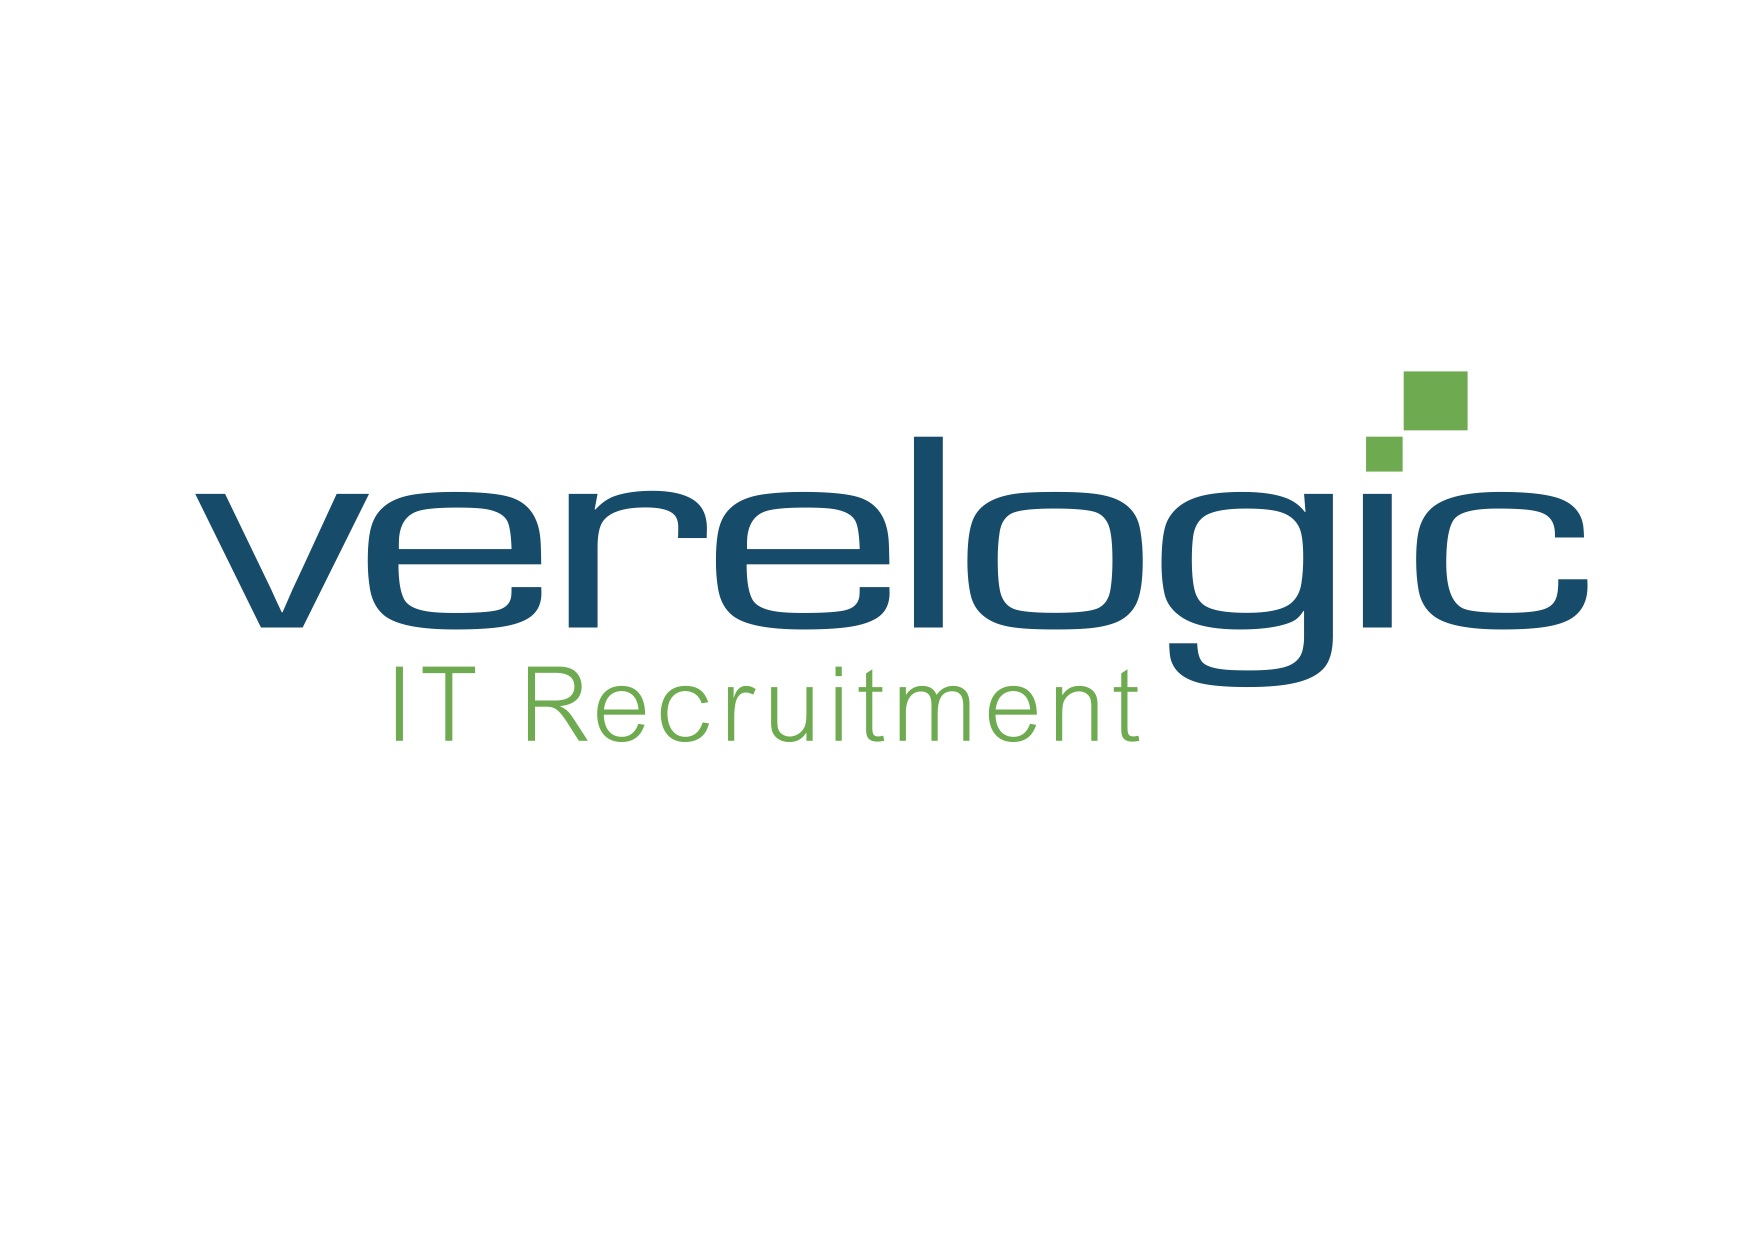 Verelogic IT Recruitment  - About Us Video